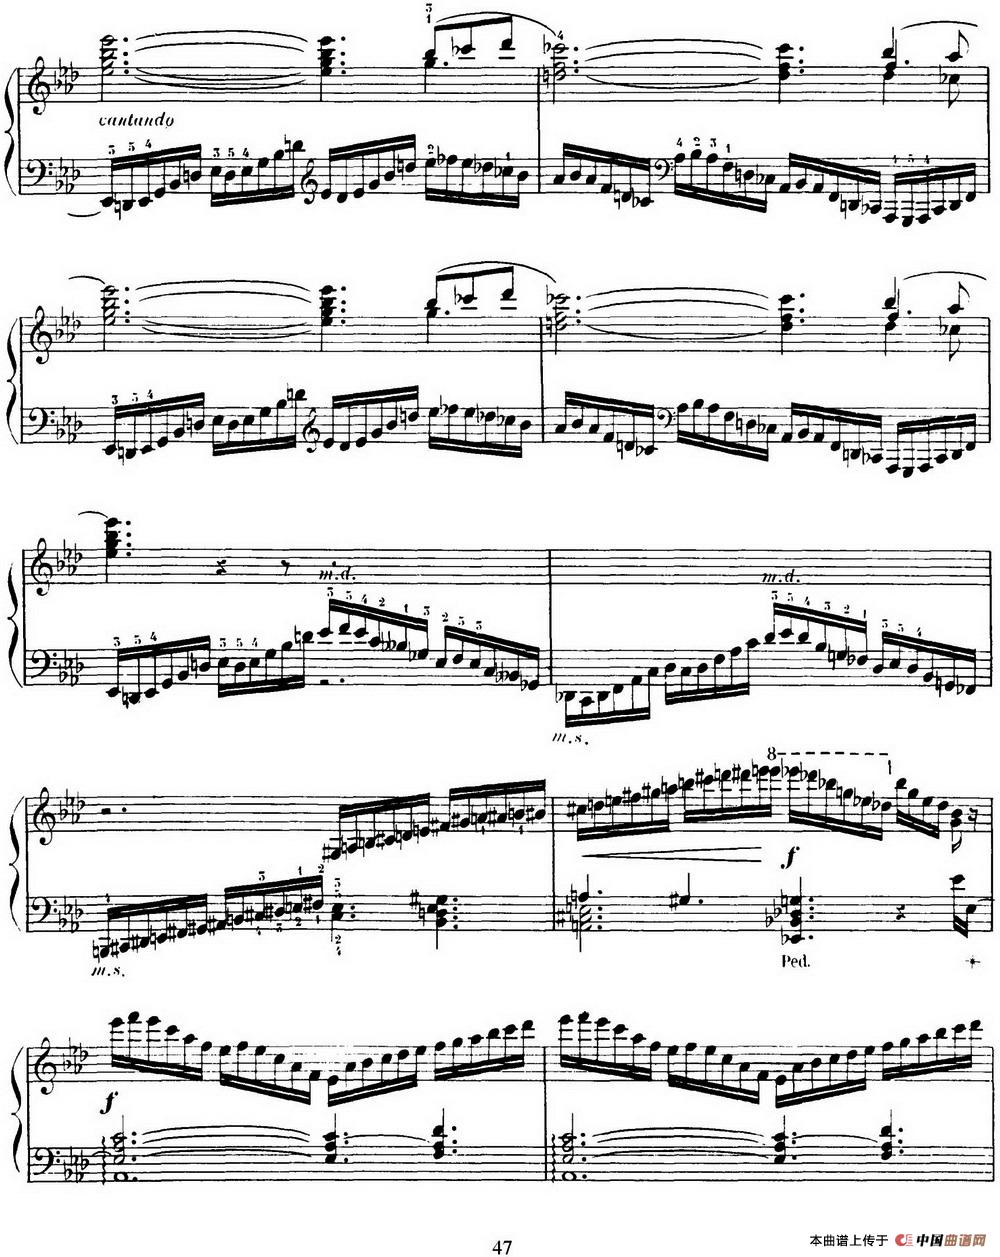 15 Etudes de Virtuosité Op.72 No.11（十五首钢琴练习曲之十一）(1)_047.jpg